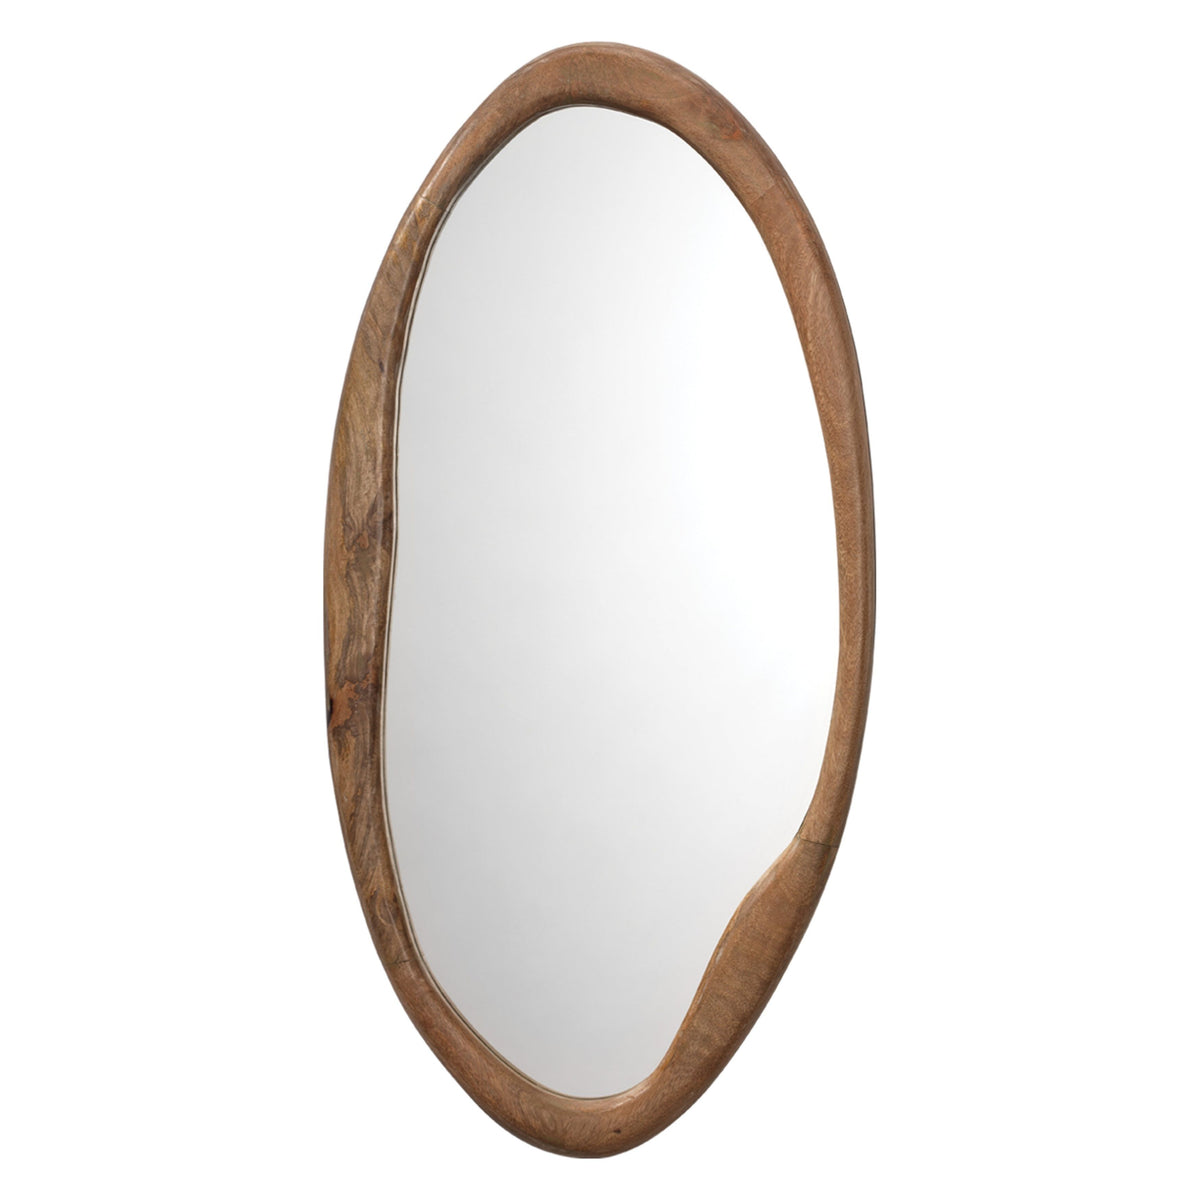 Jamie Young Company - 6ORGA-OVNA - Organic Oval Mirror -  - Natural 